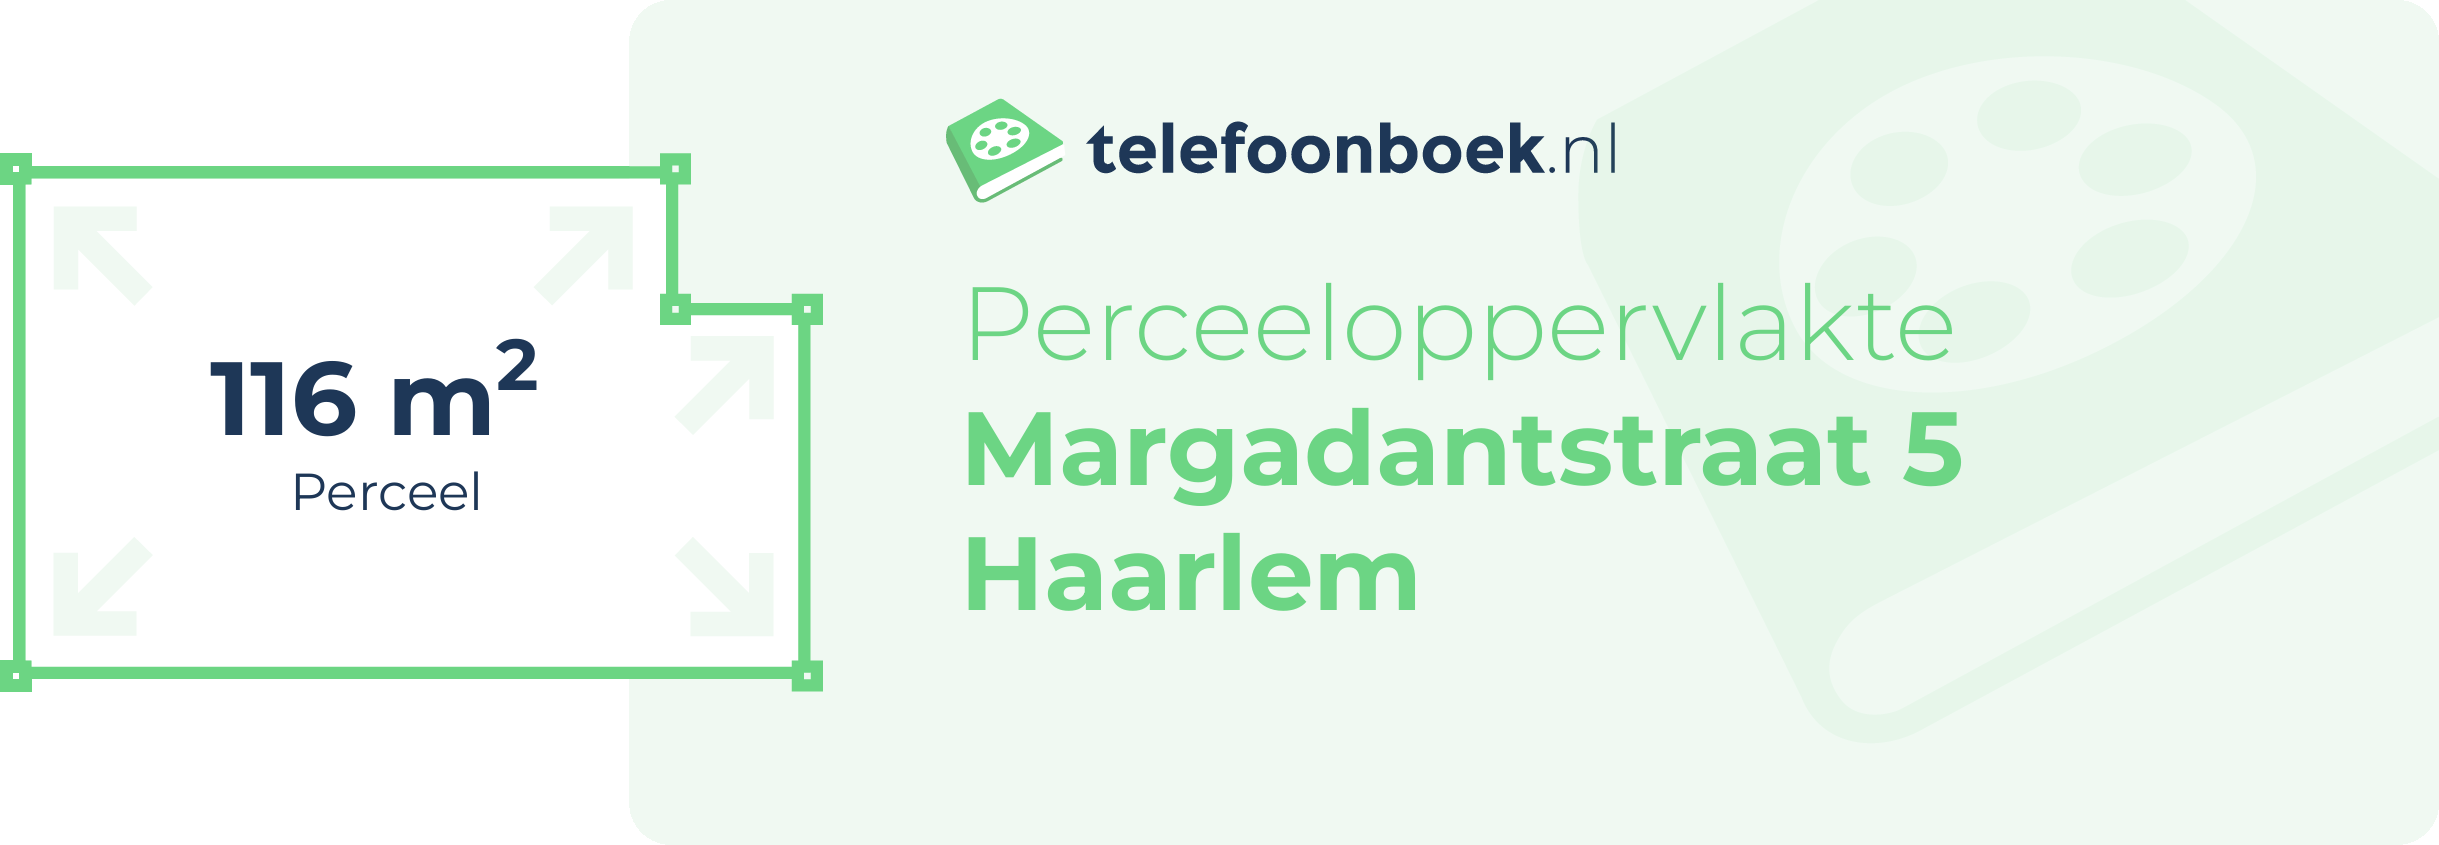 Perceeloppervlakte Margadantstraat 5 Haarlem